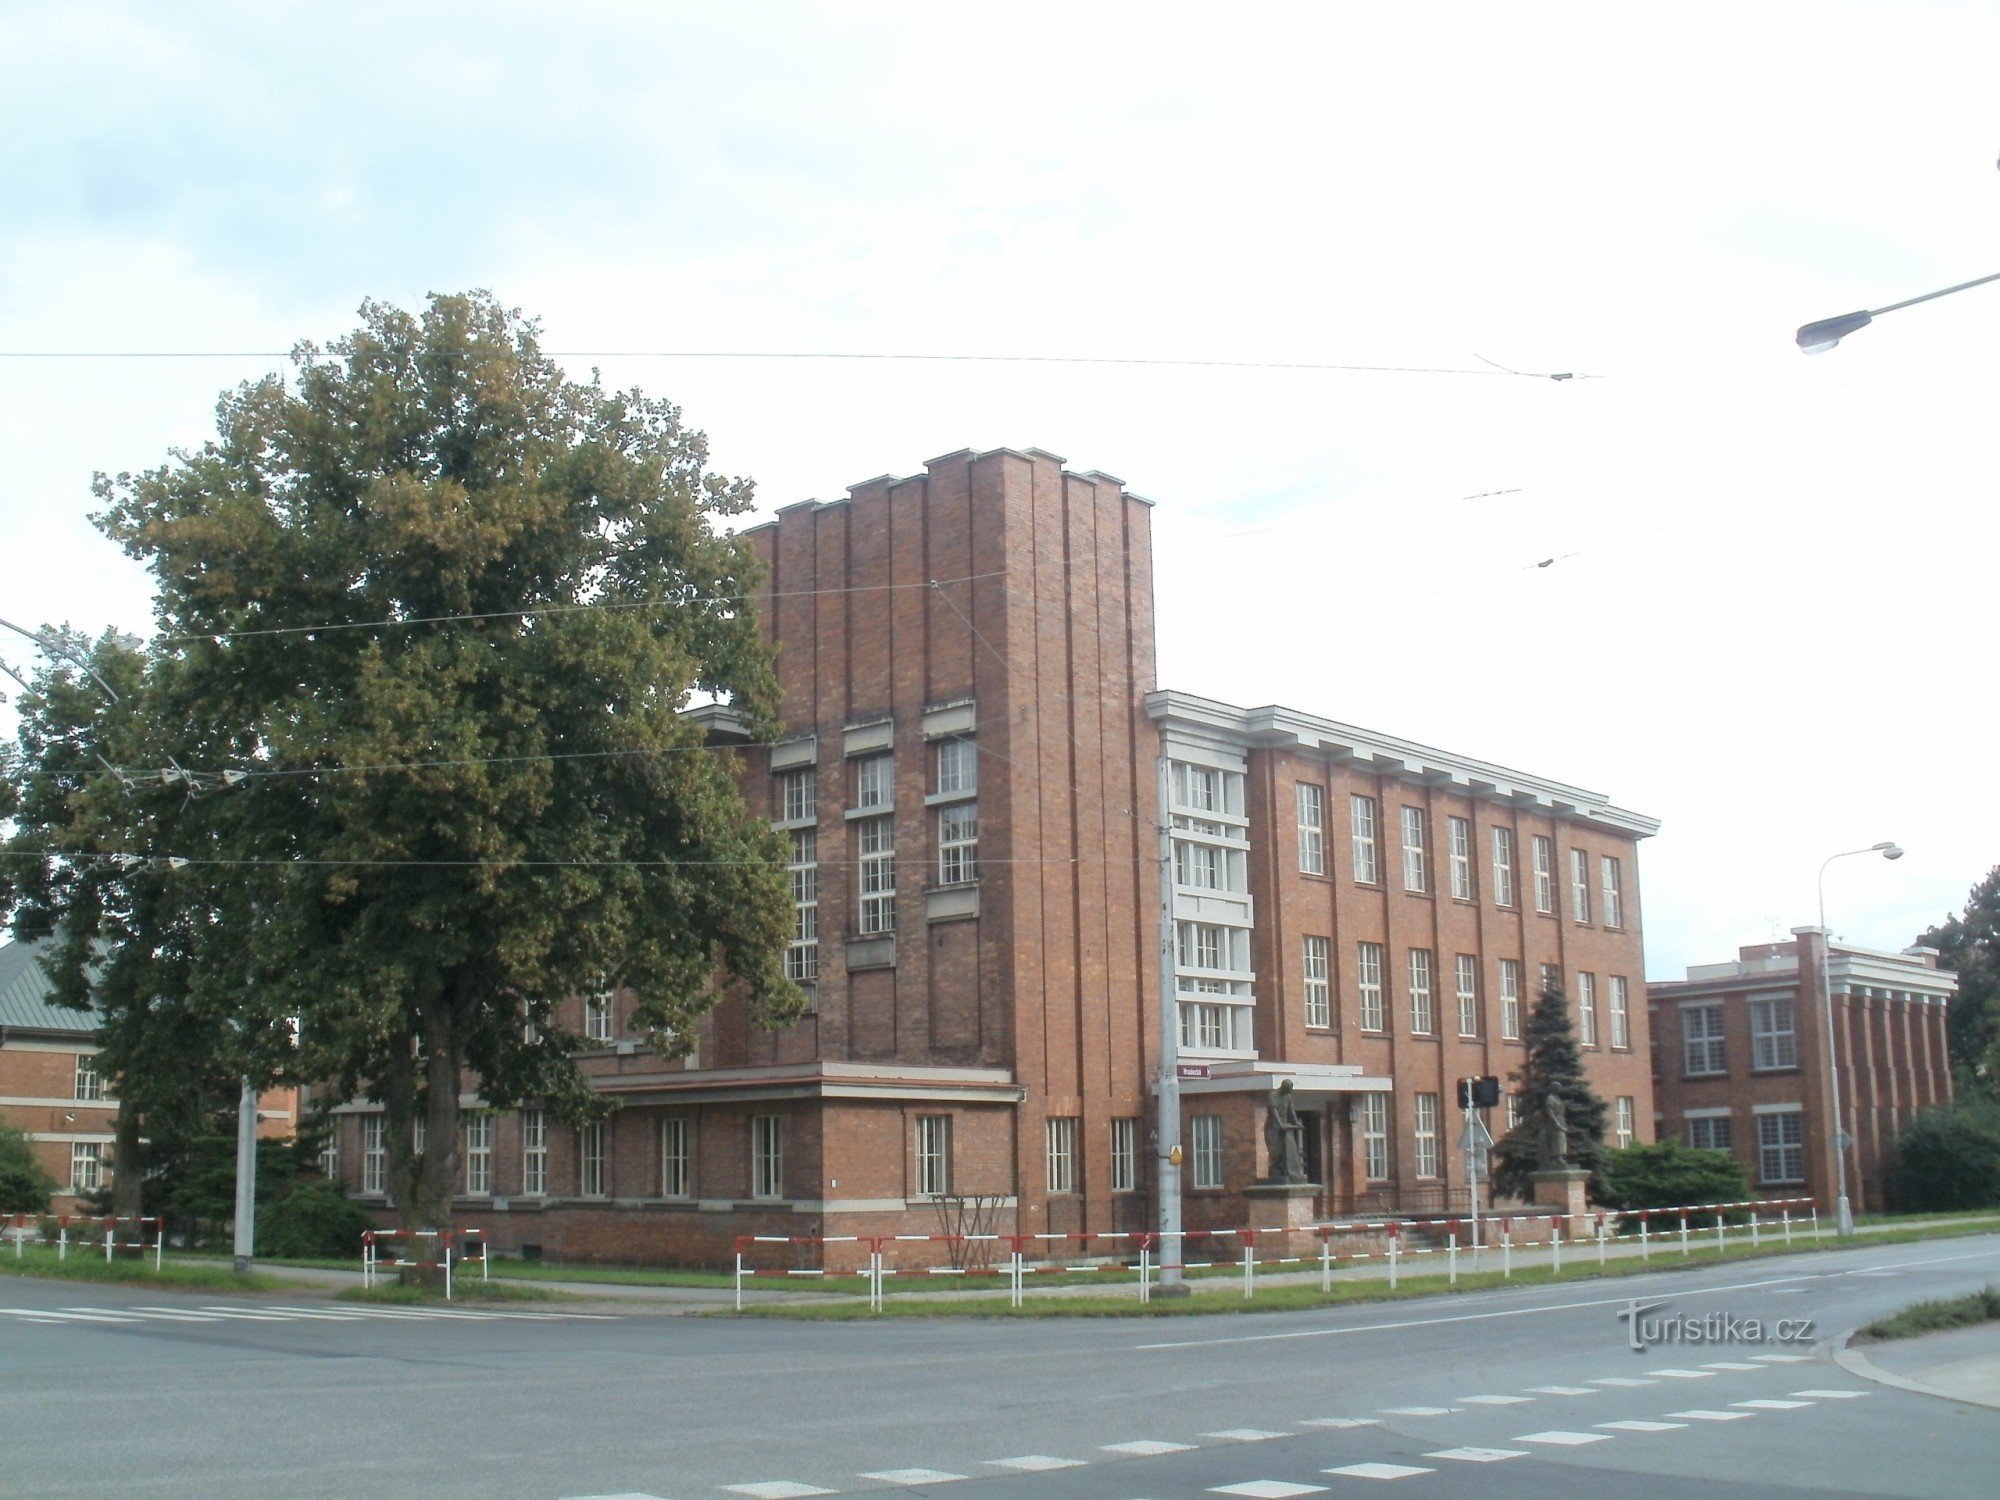 Hradec Králové - ゴチャールの旧コジェルーシュ学校